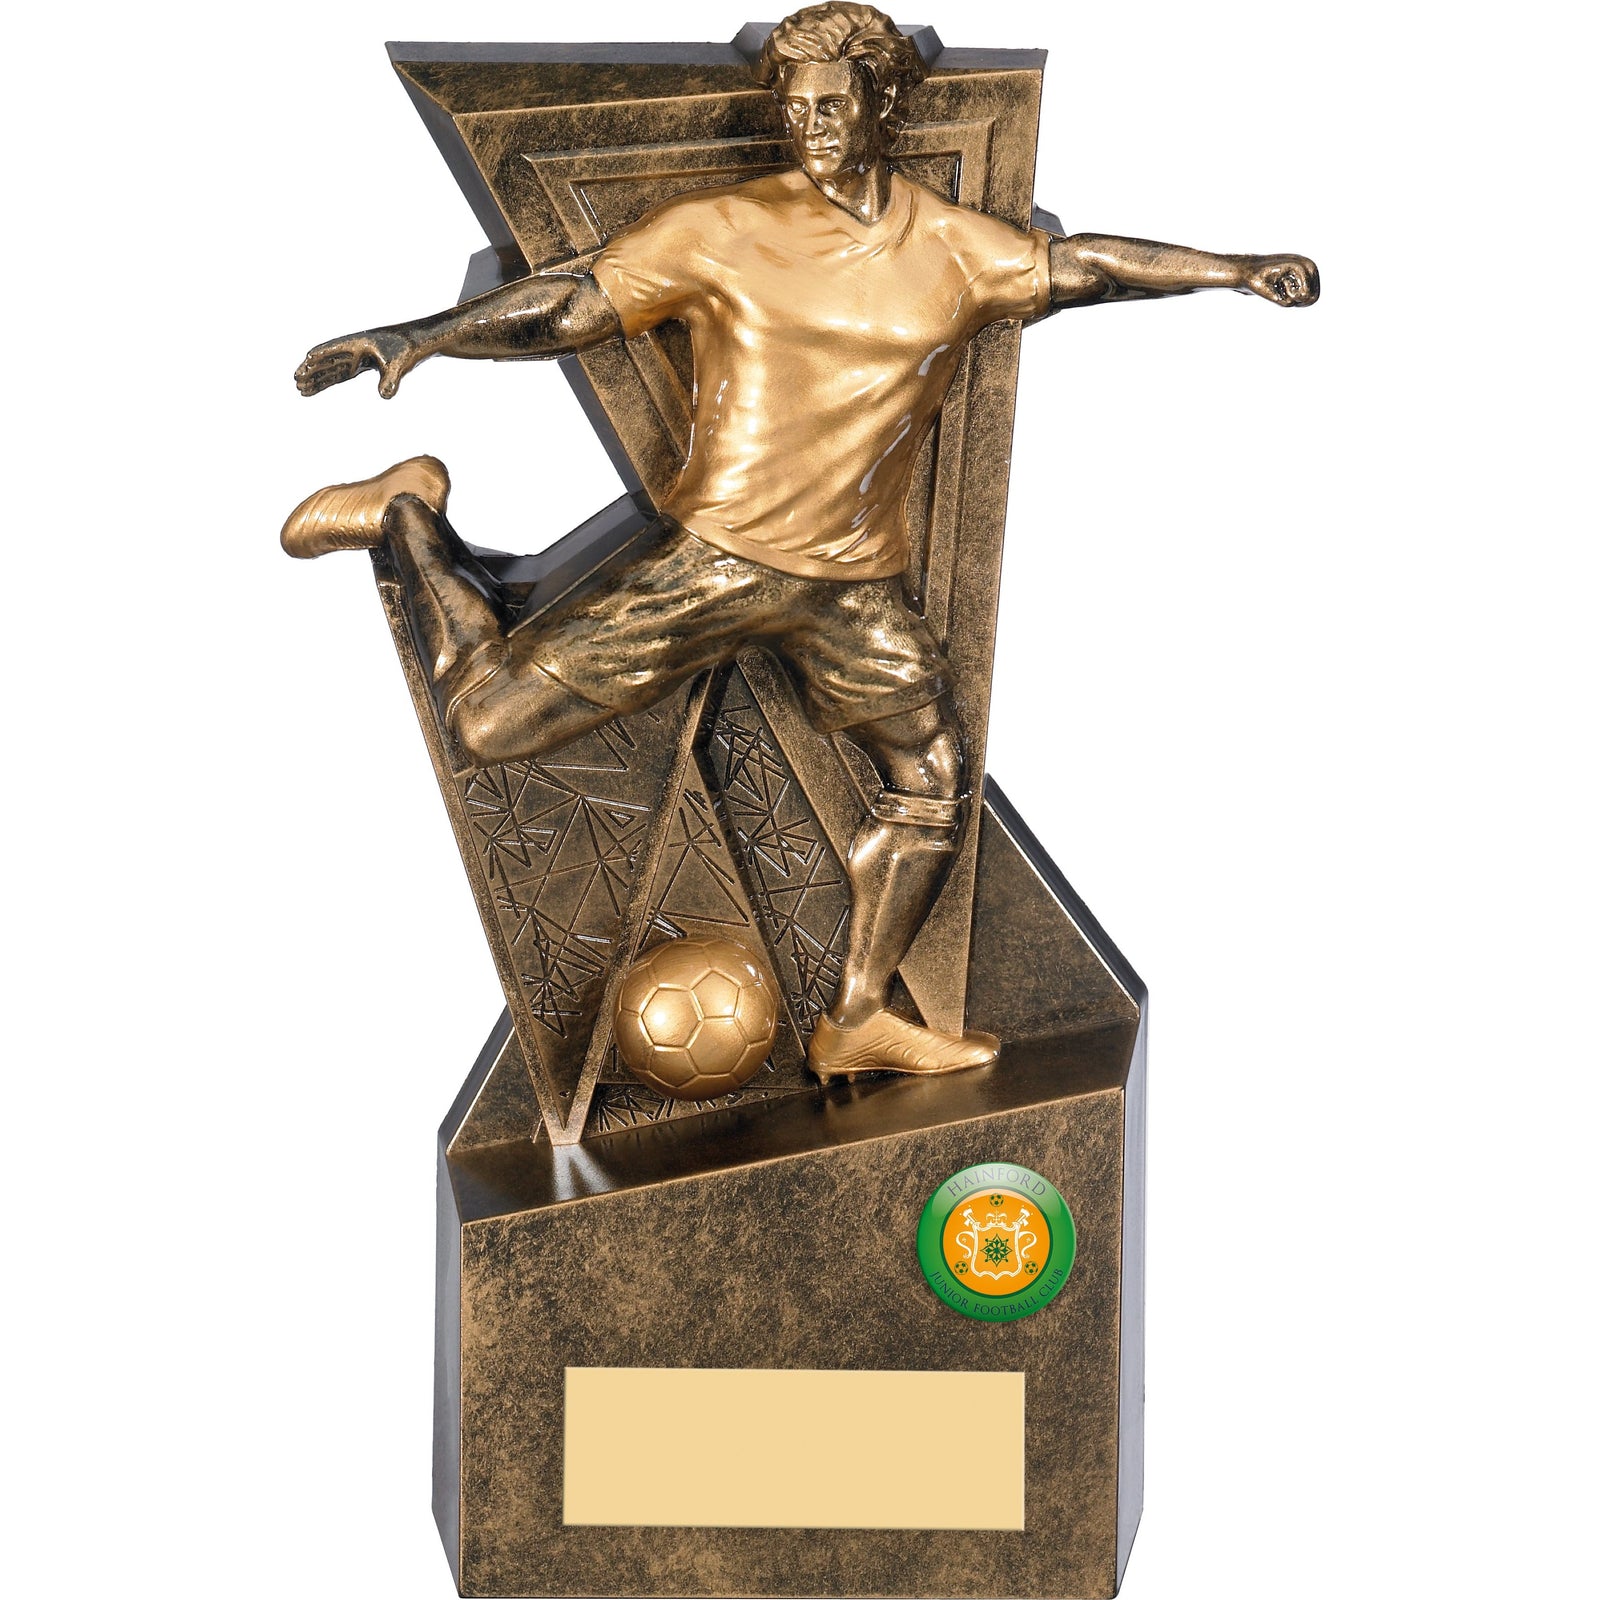 Legacy Male Football Figurine Award